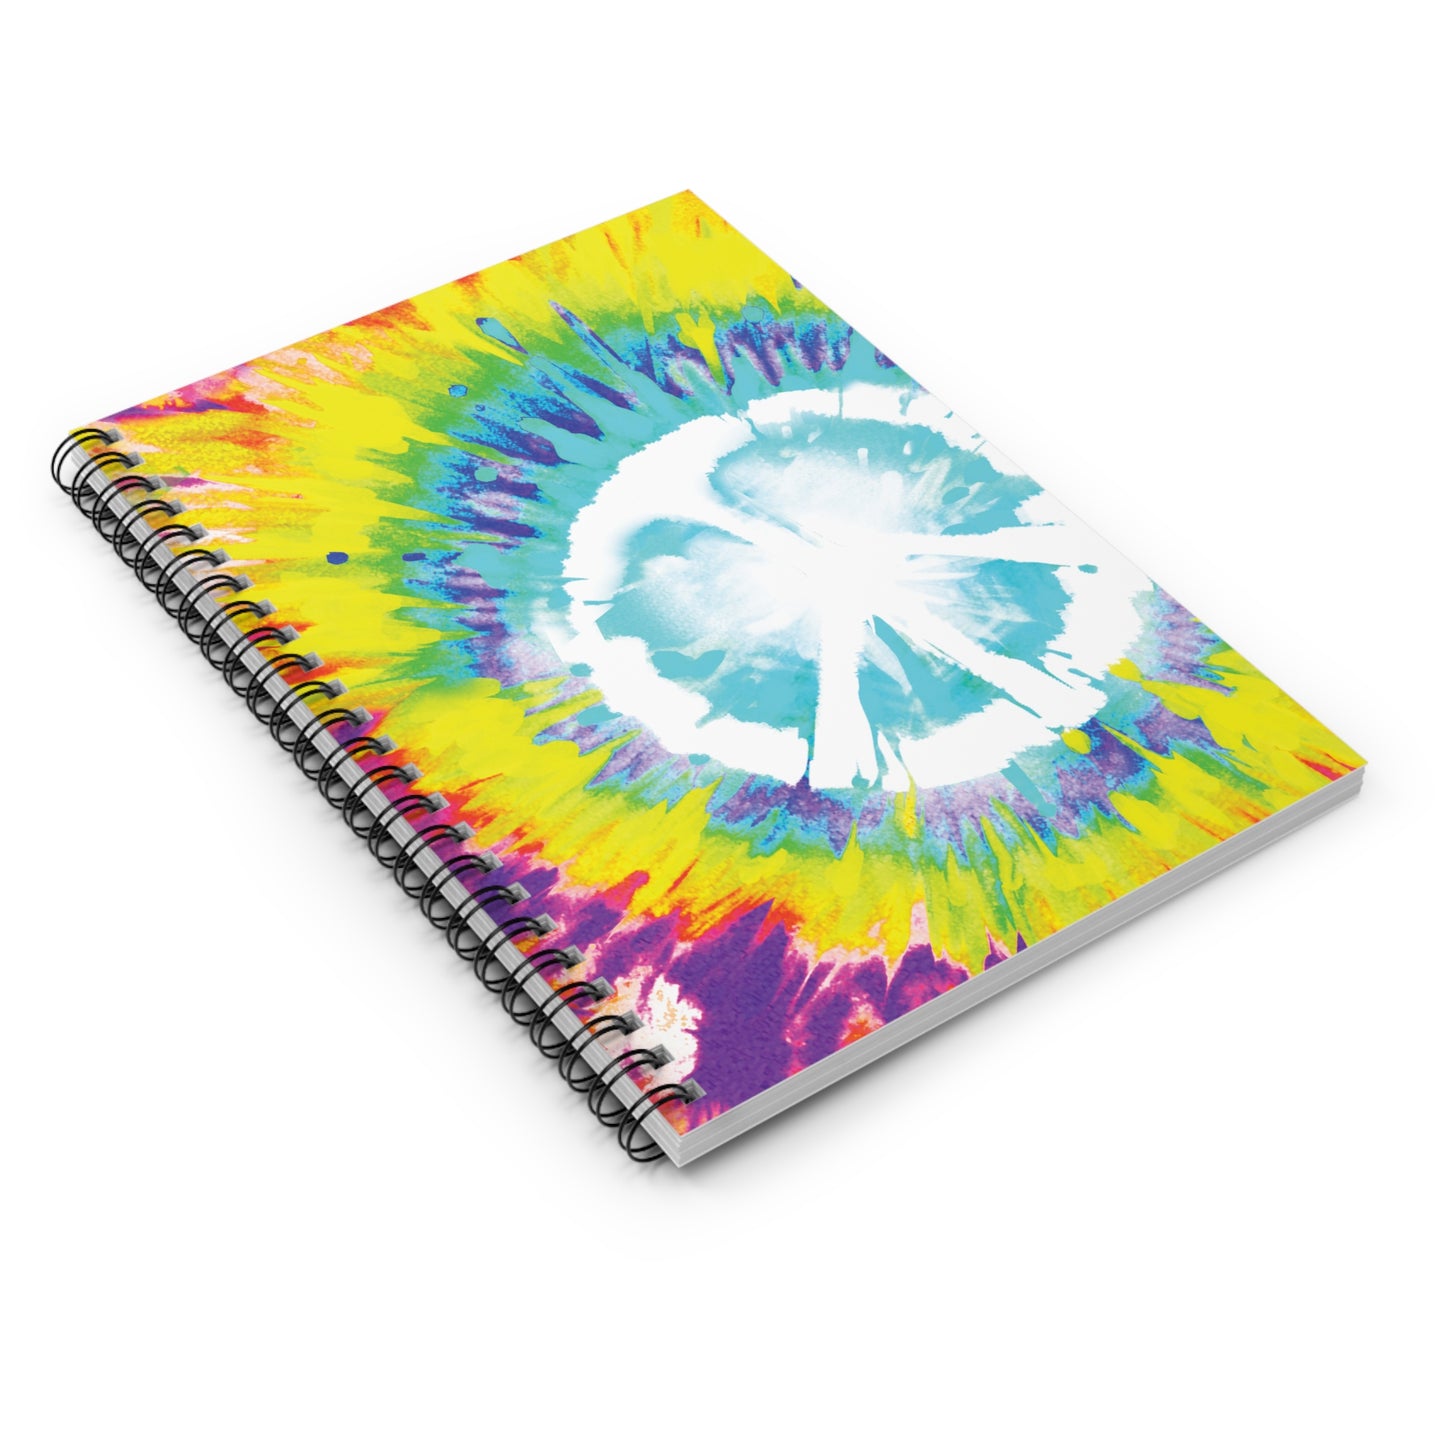 Tie Dye - Spiral Notebook - Ruled Line